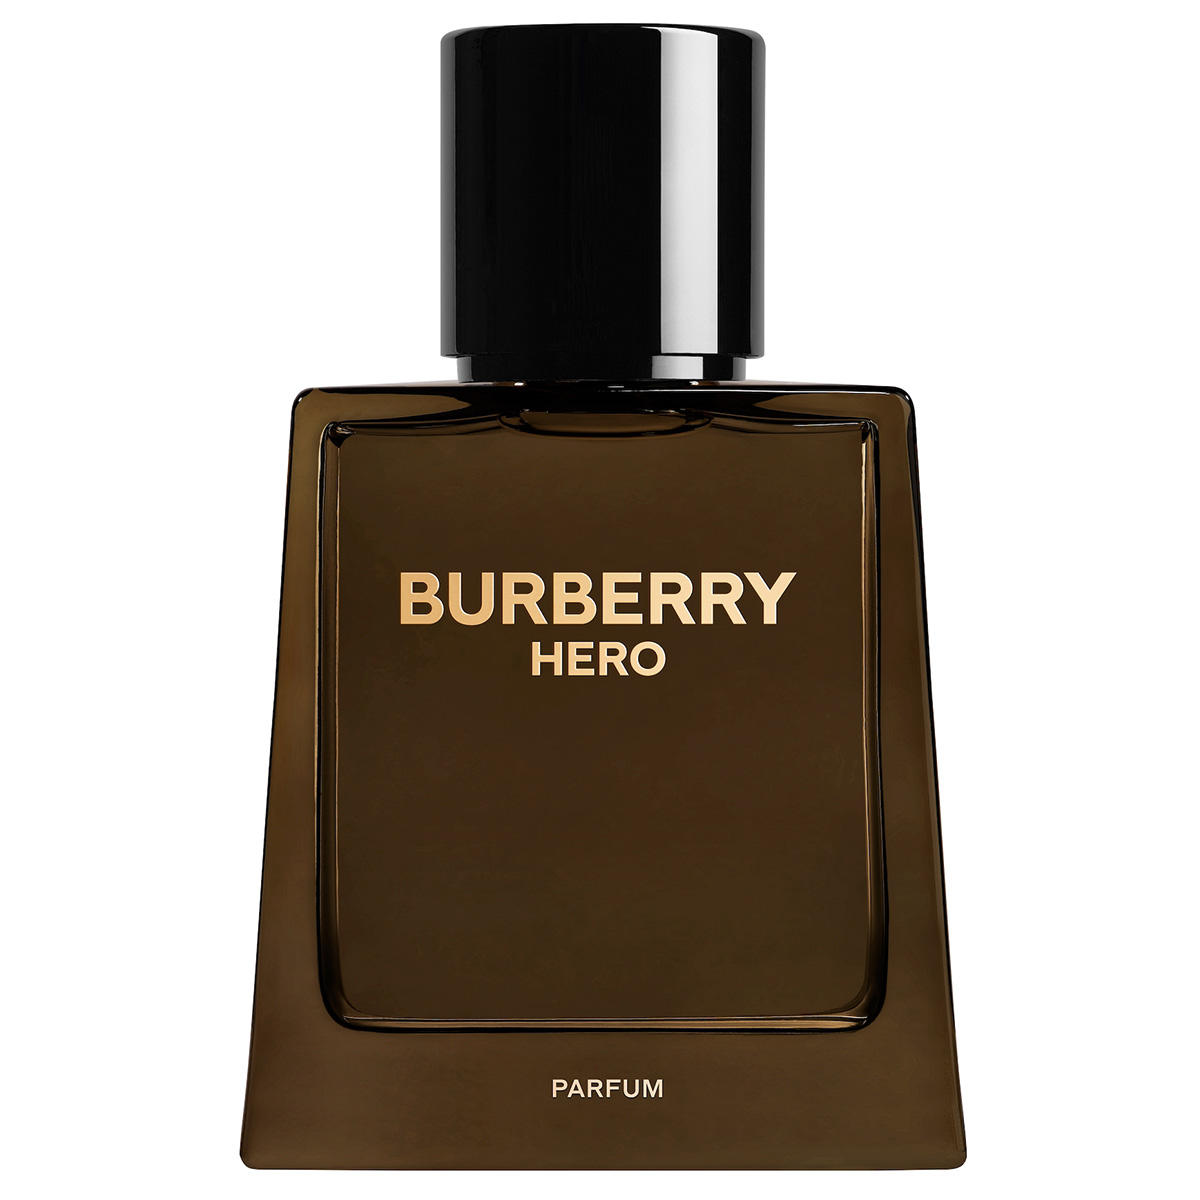 BURBERRY HERO Parfum  - 1